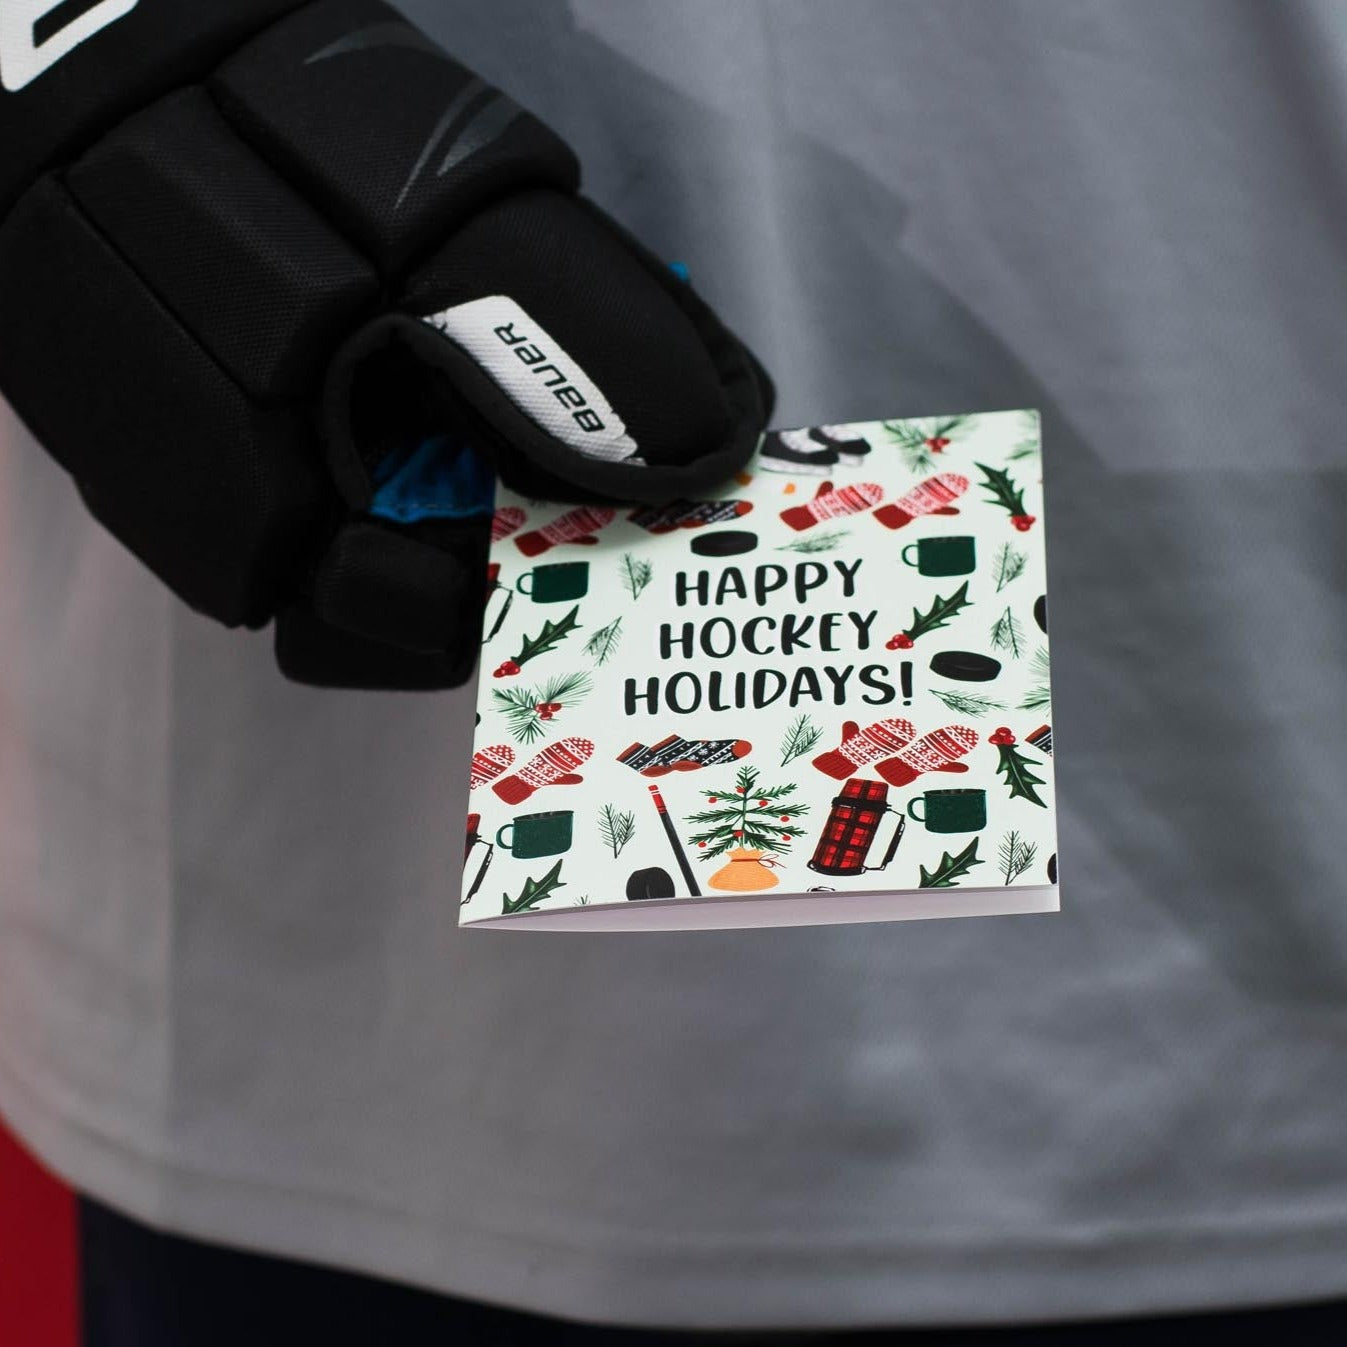 Happy Hockey Holidays! - Greeting Card